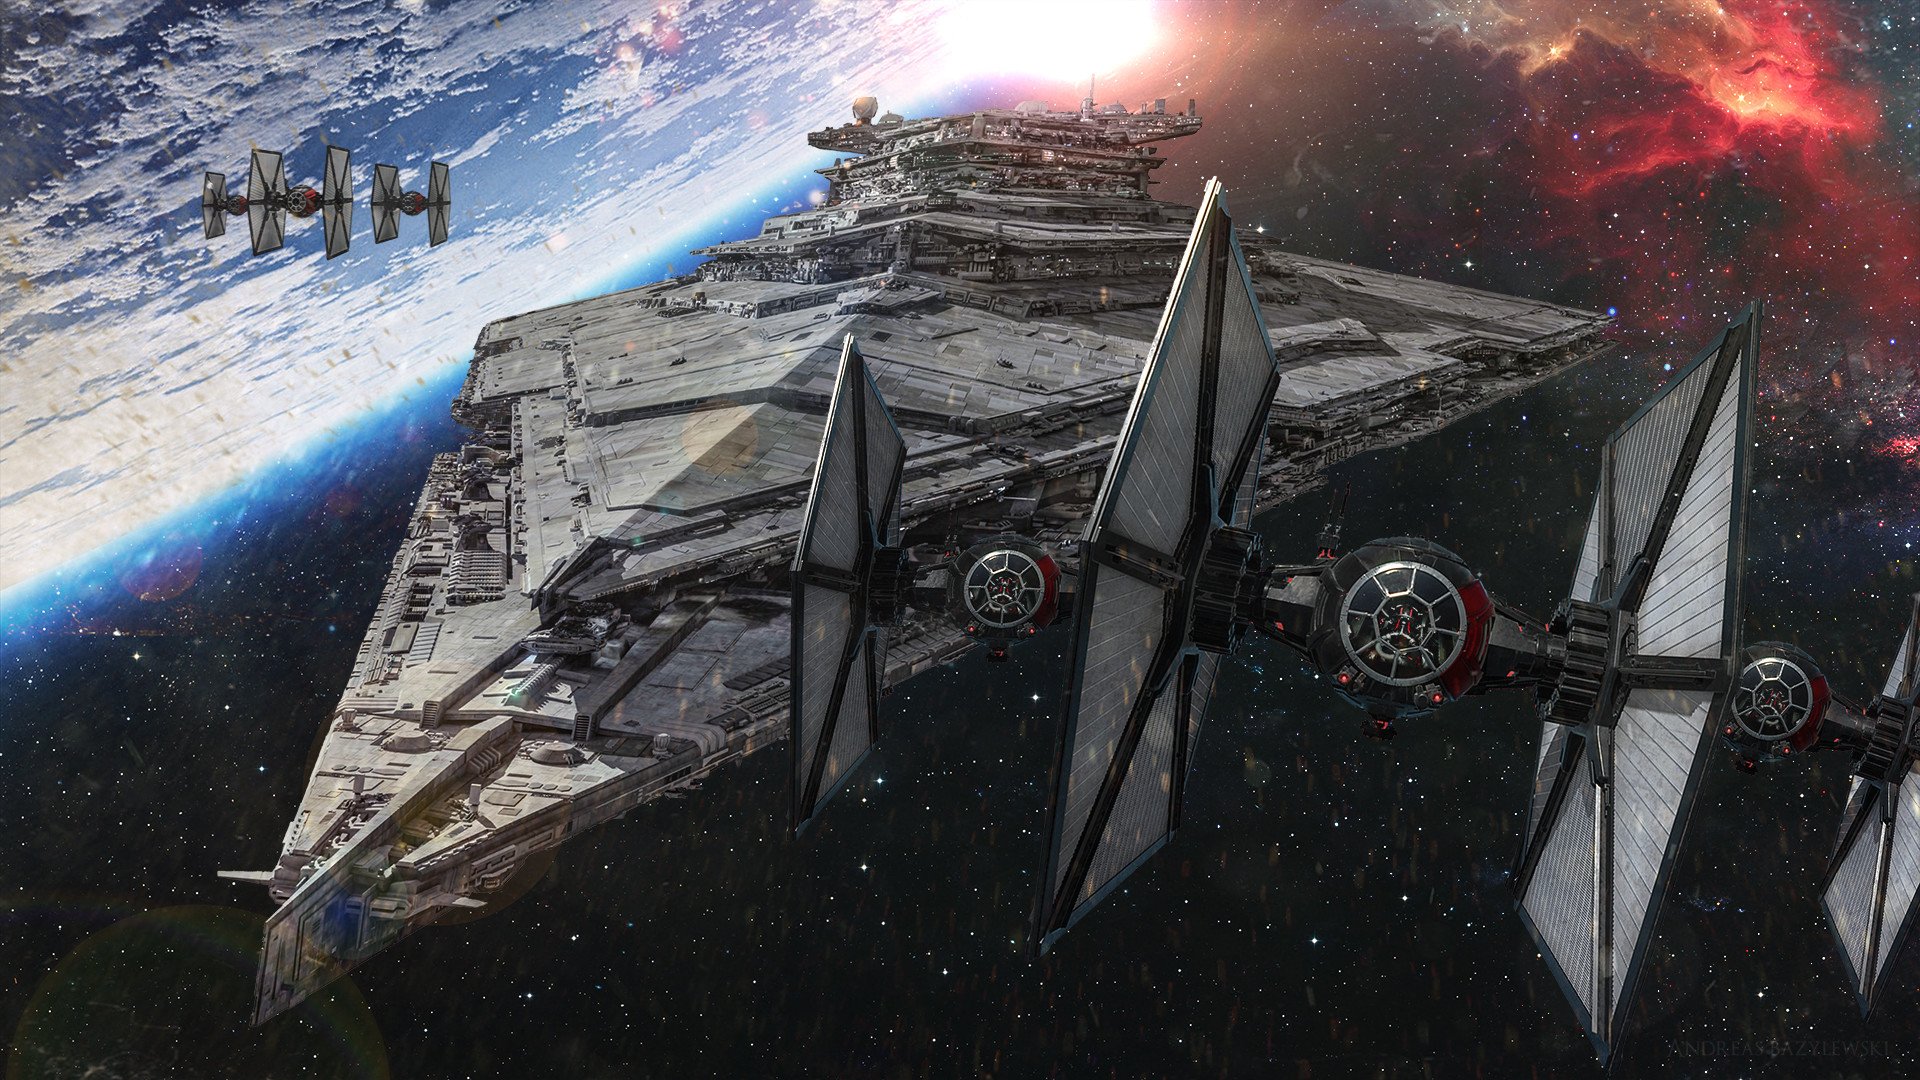 Star Wars: The Force Awakens Desktop Wallpaper